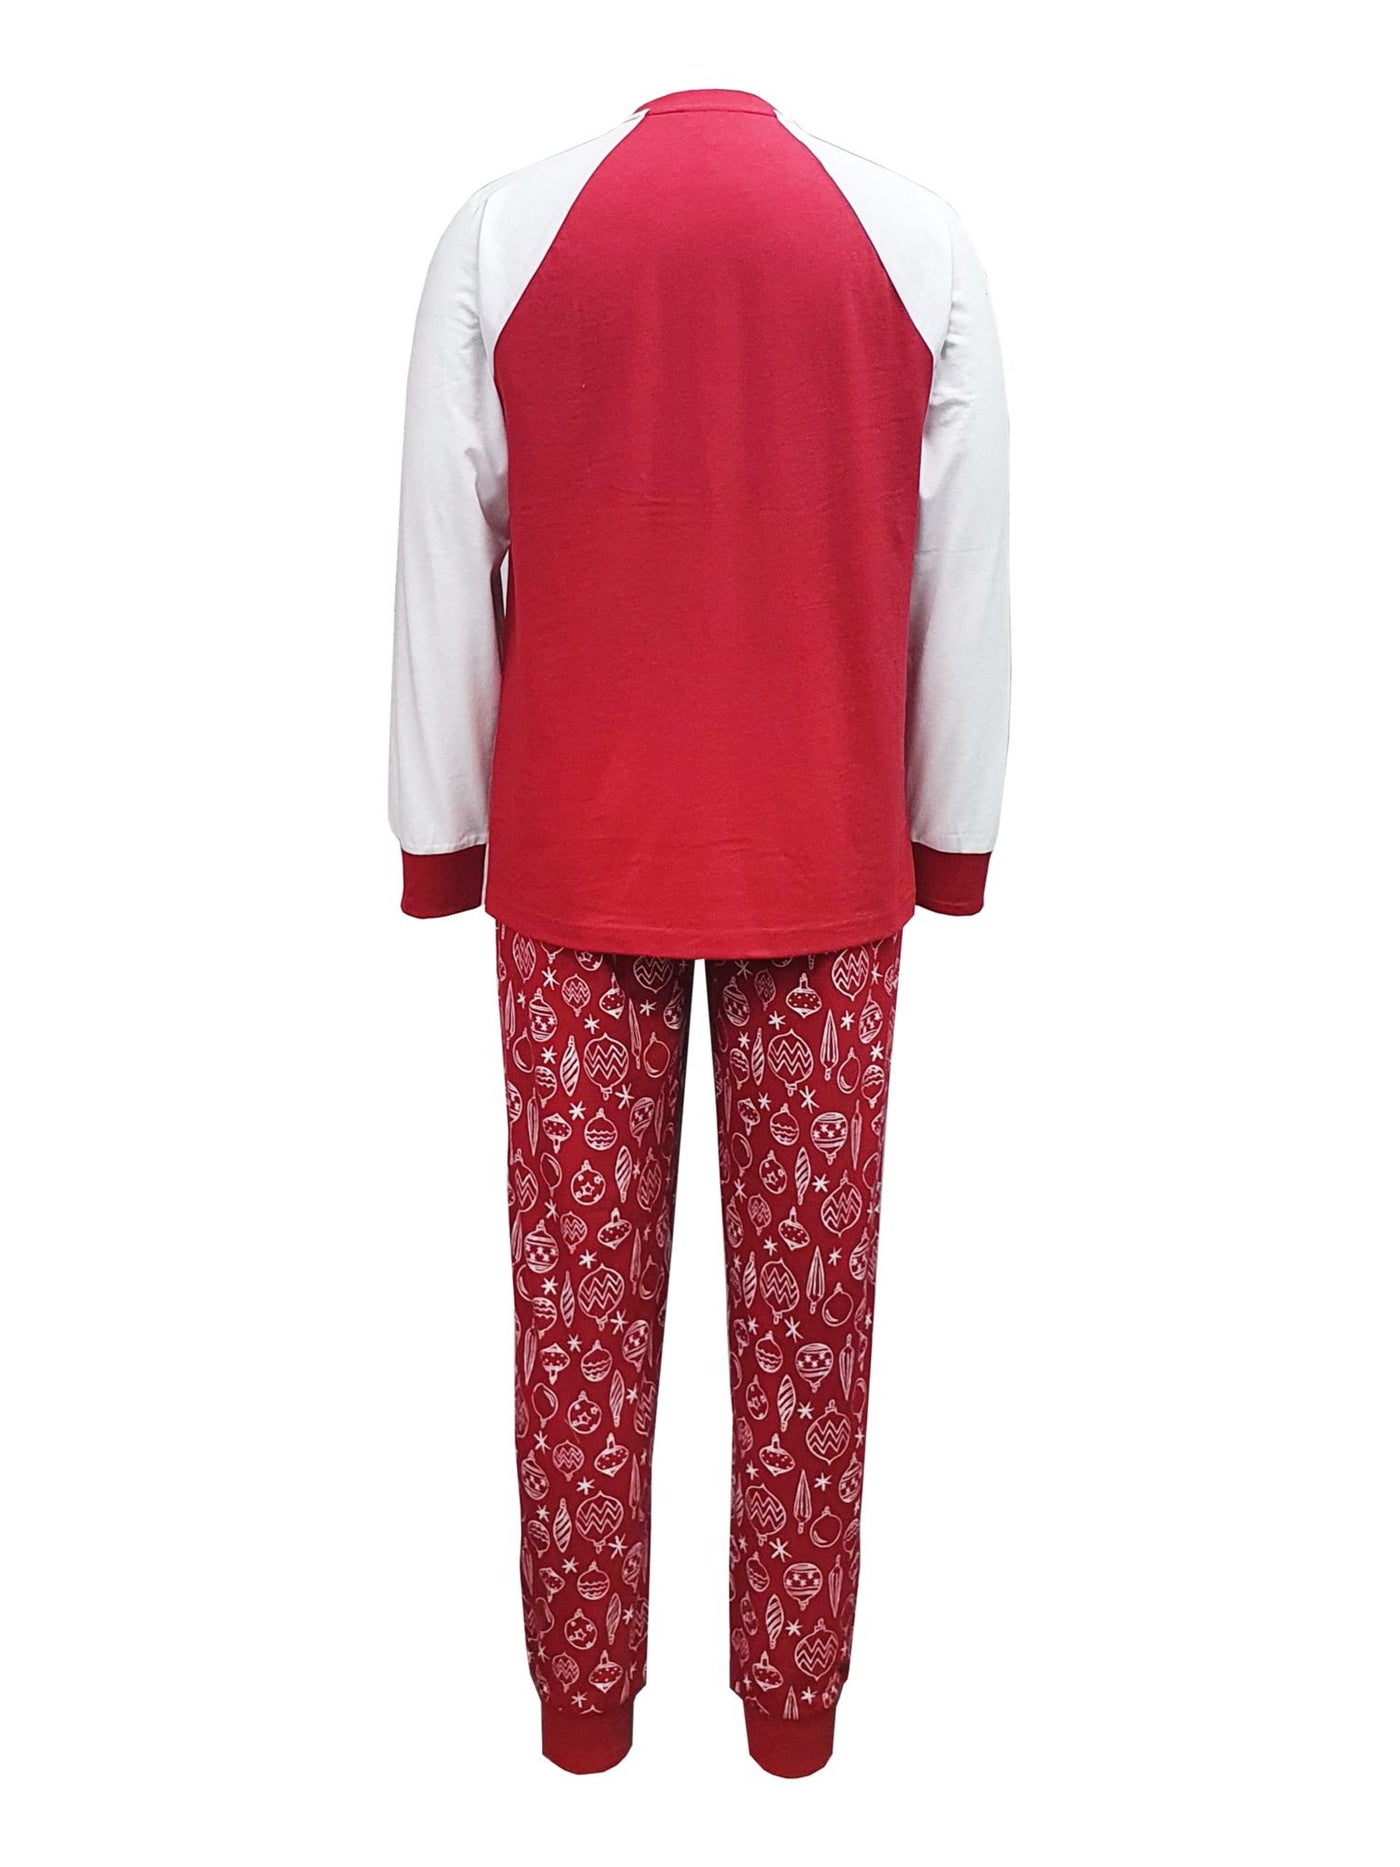 FAMILY PJs Mens Red Graphic Drawstring Long Sleeve T-Shirt Top Cuffed Pants Pajamas XXL